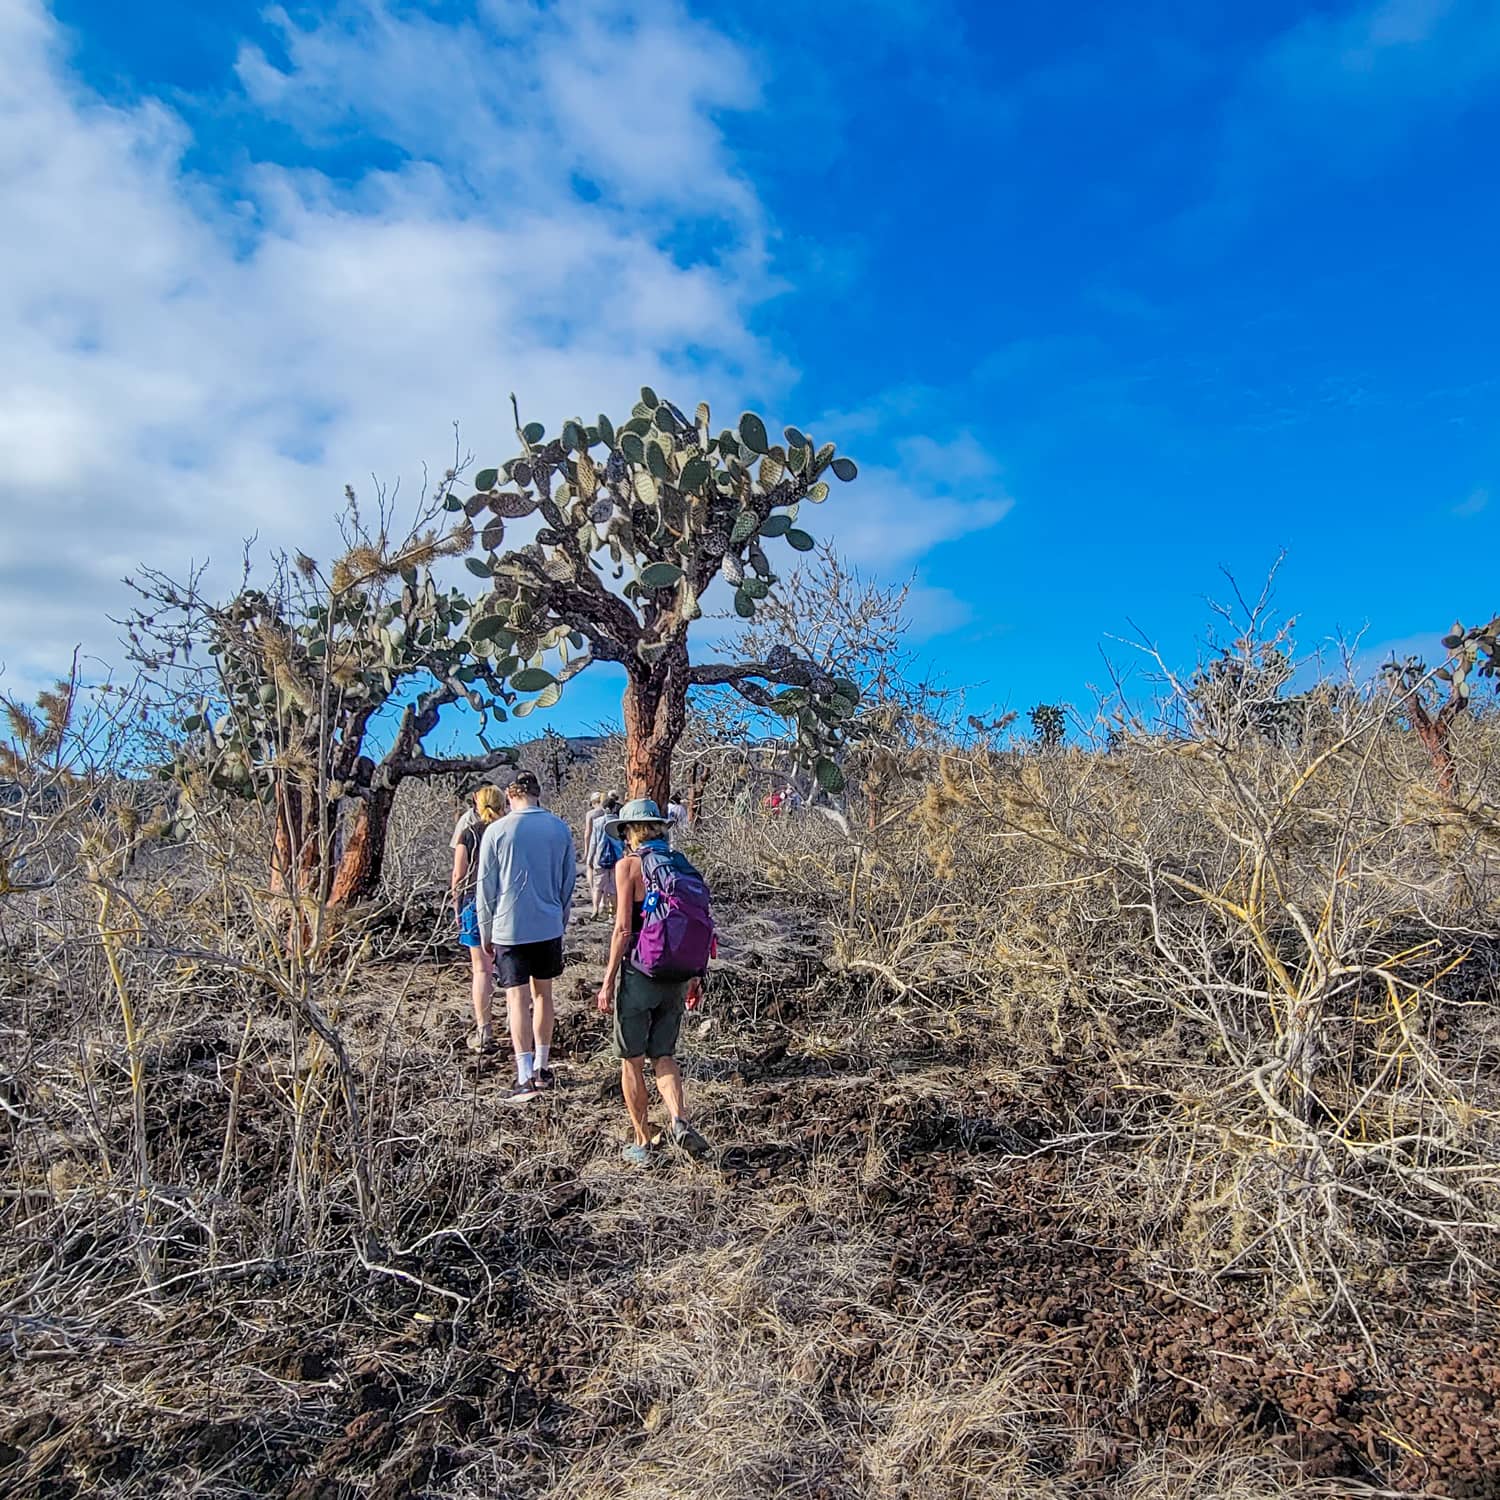 galapagos dry environment - galapagos island travel packages